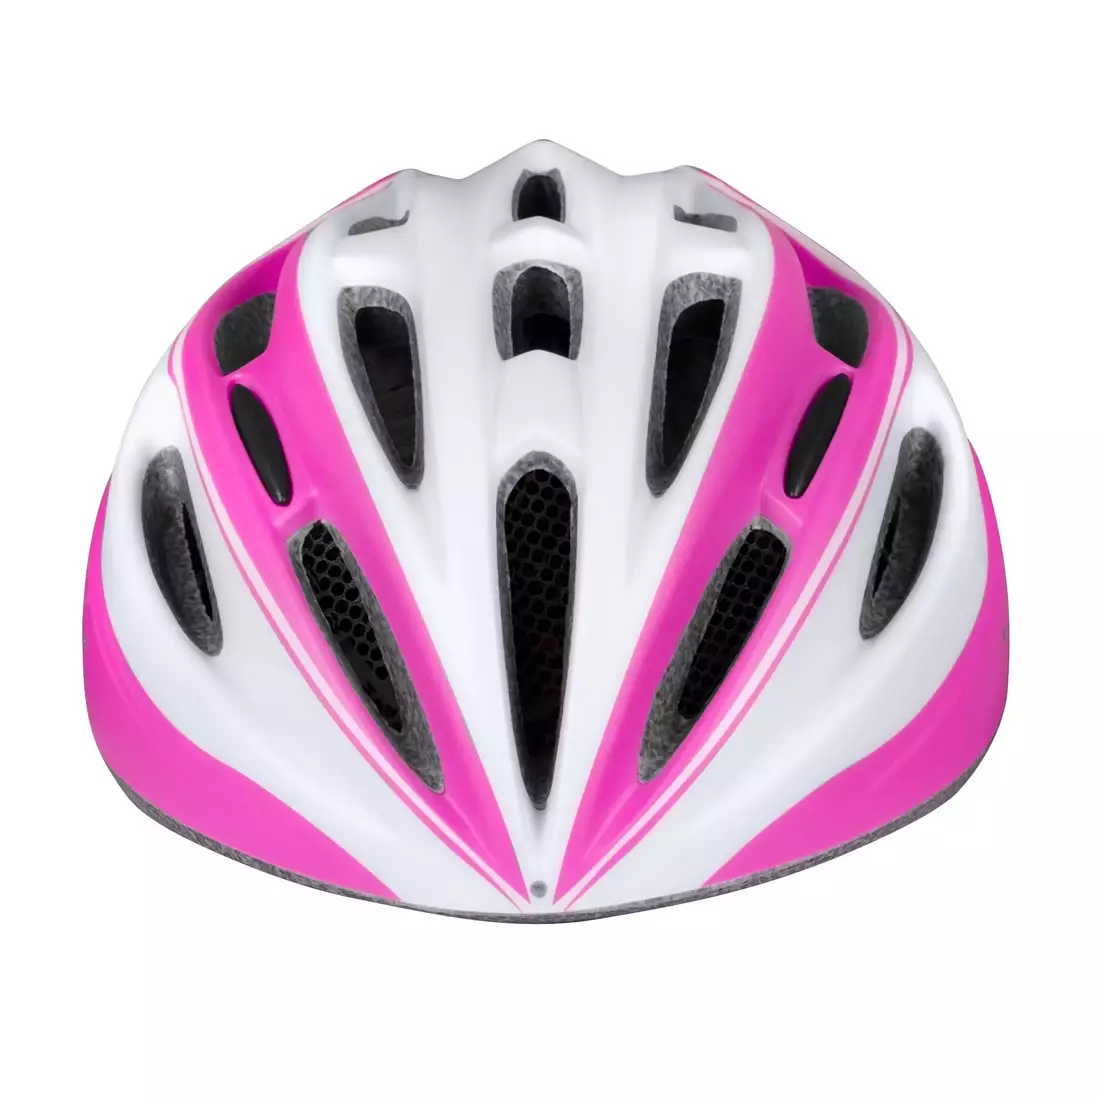 FORCE Road bike helmet TERY, white and pink 902735